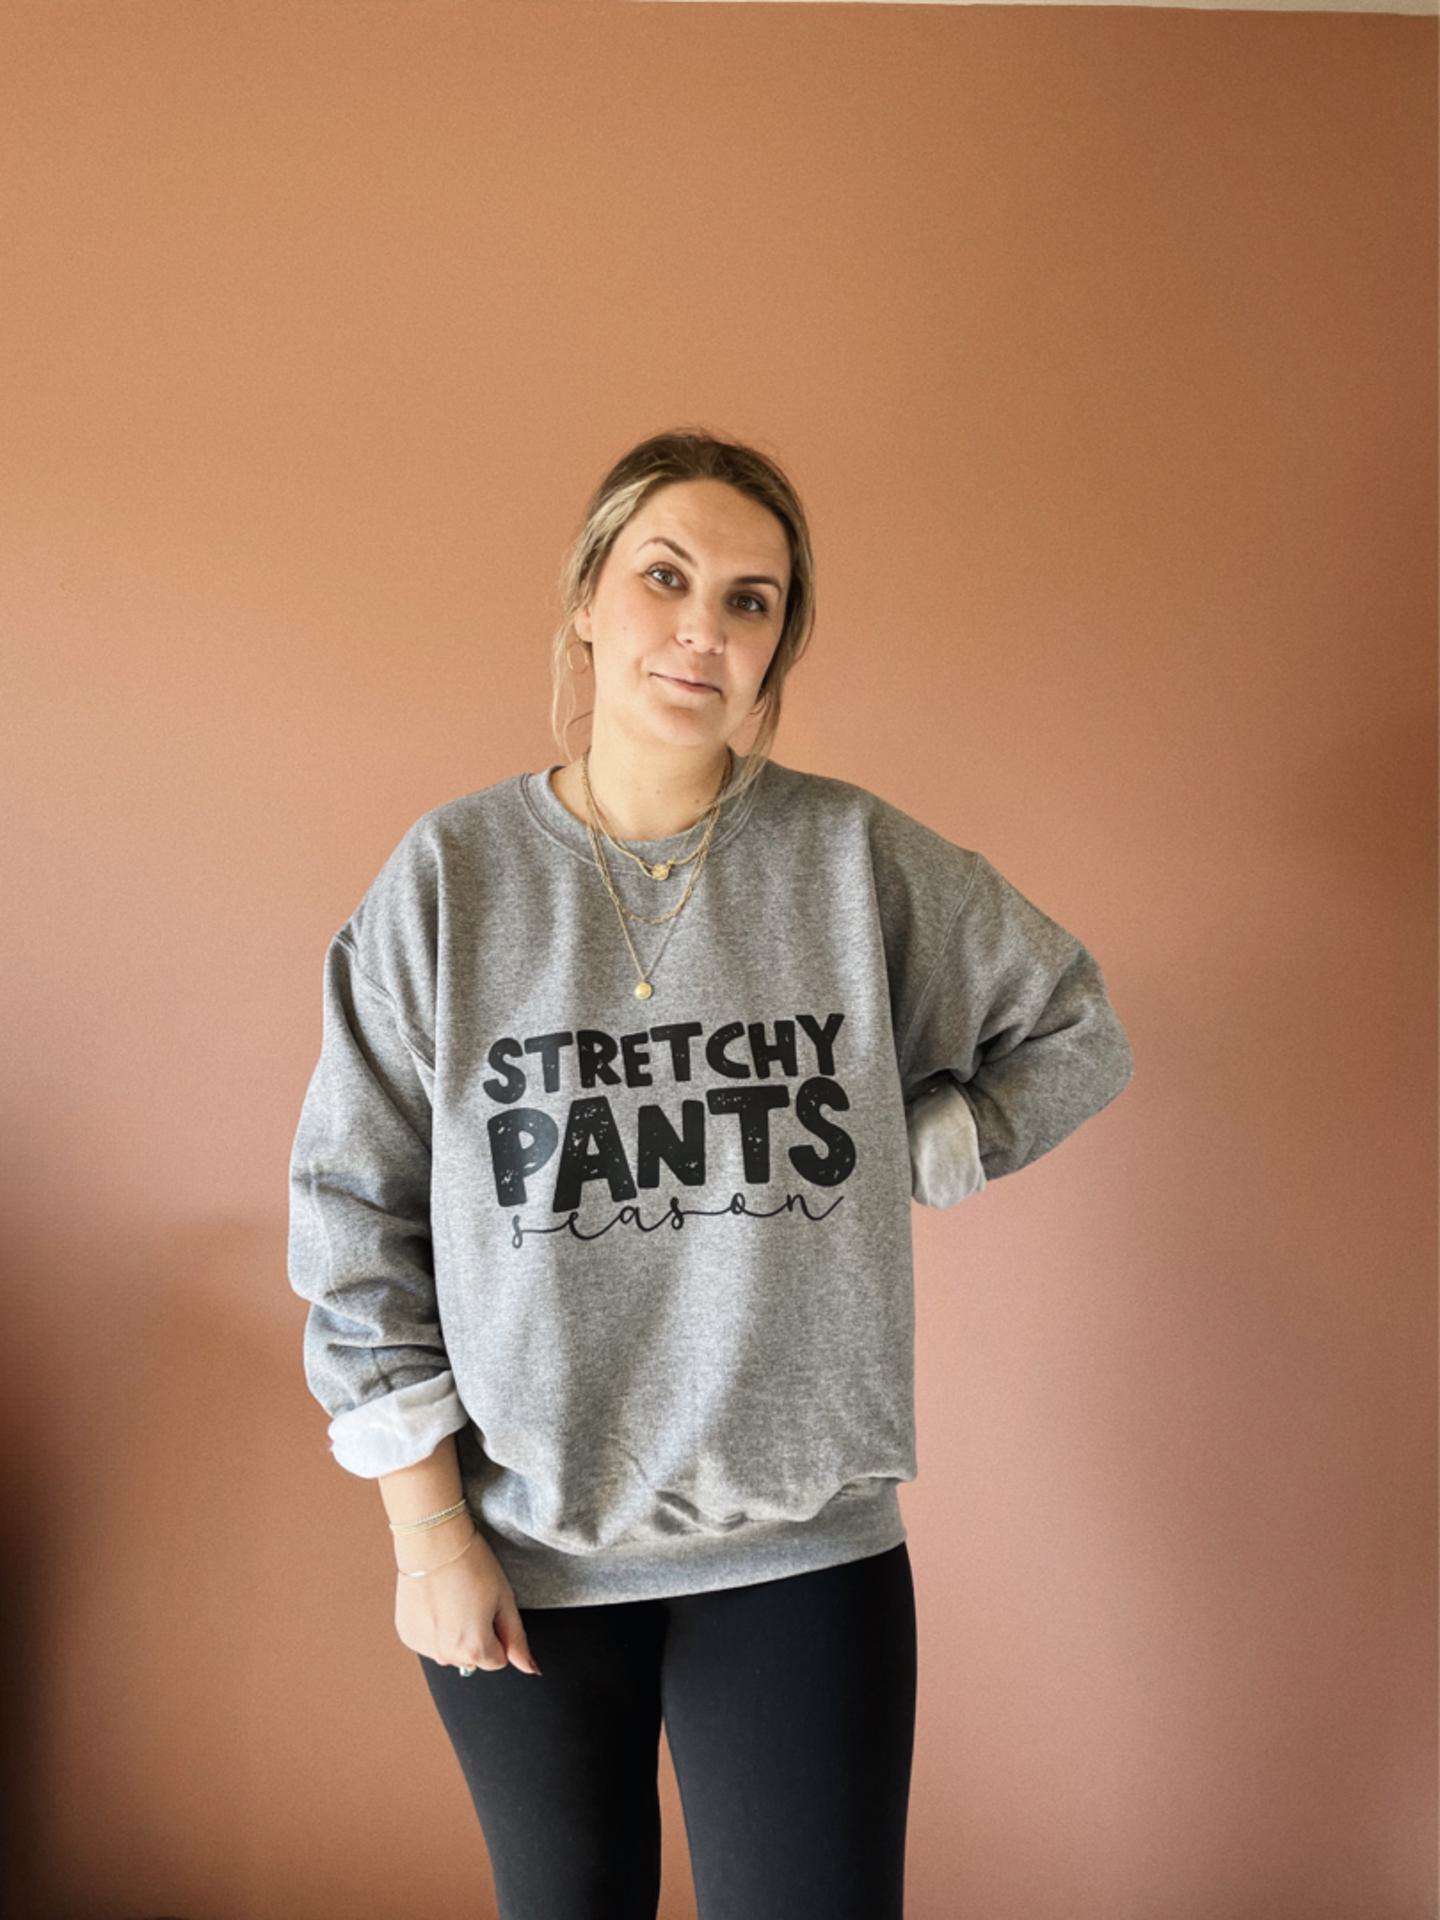 Stretchy Pants Season Sweatshirt